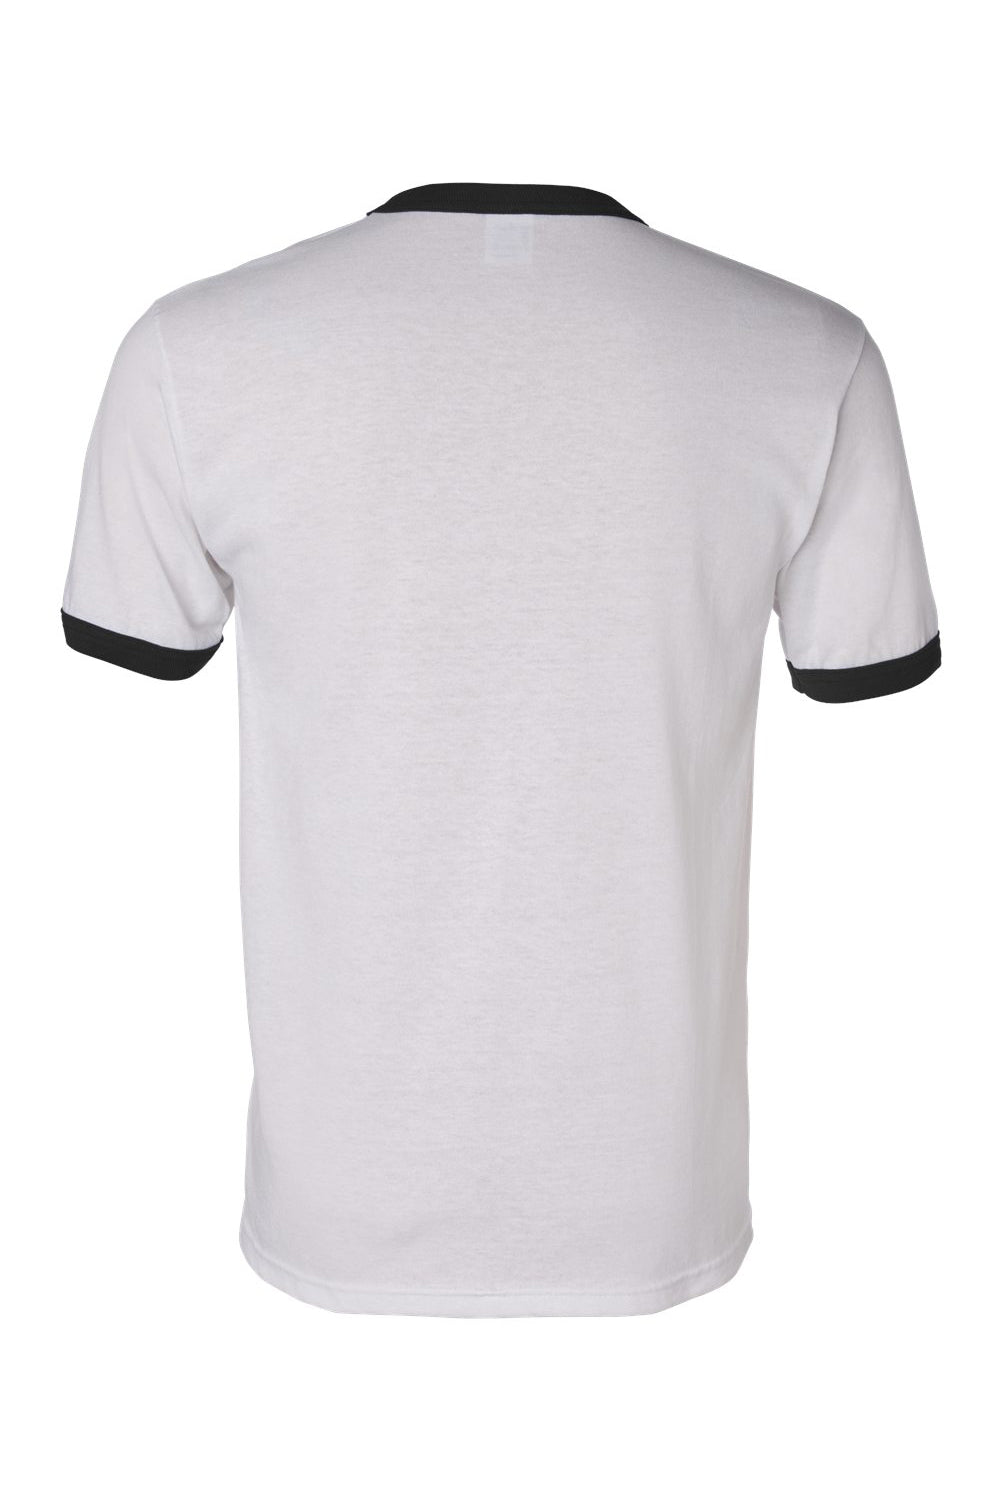 Augusta Sportswear 710 Mens Ringer Short Sleeve Crewneck T-Shirt White/Black Flat Back